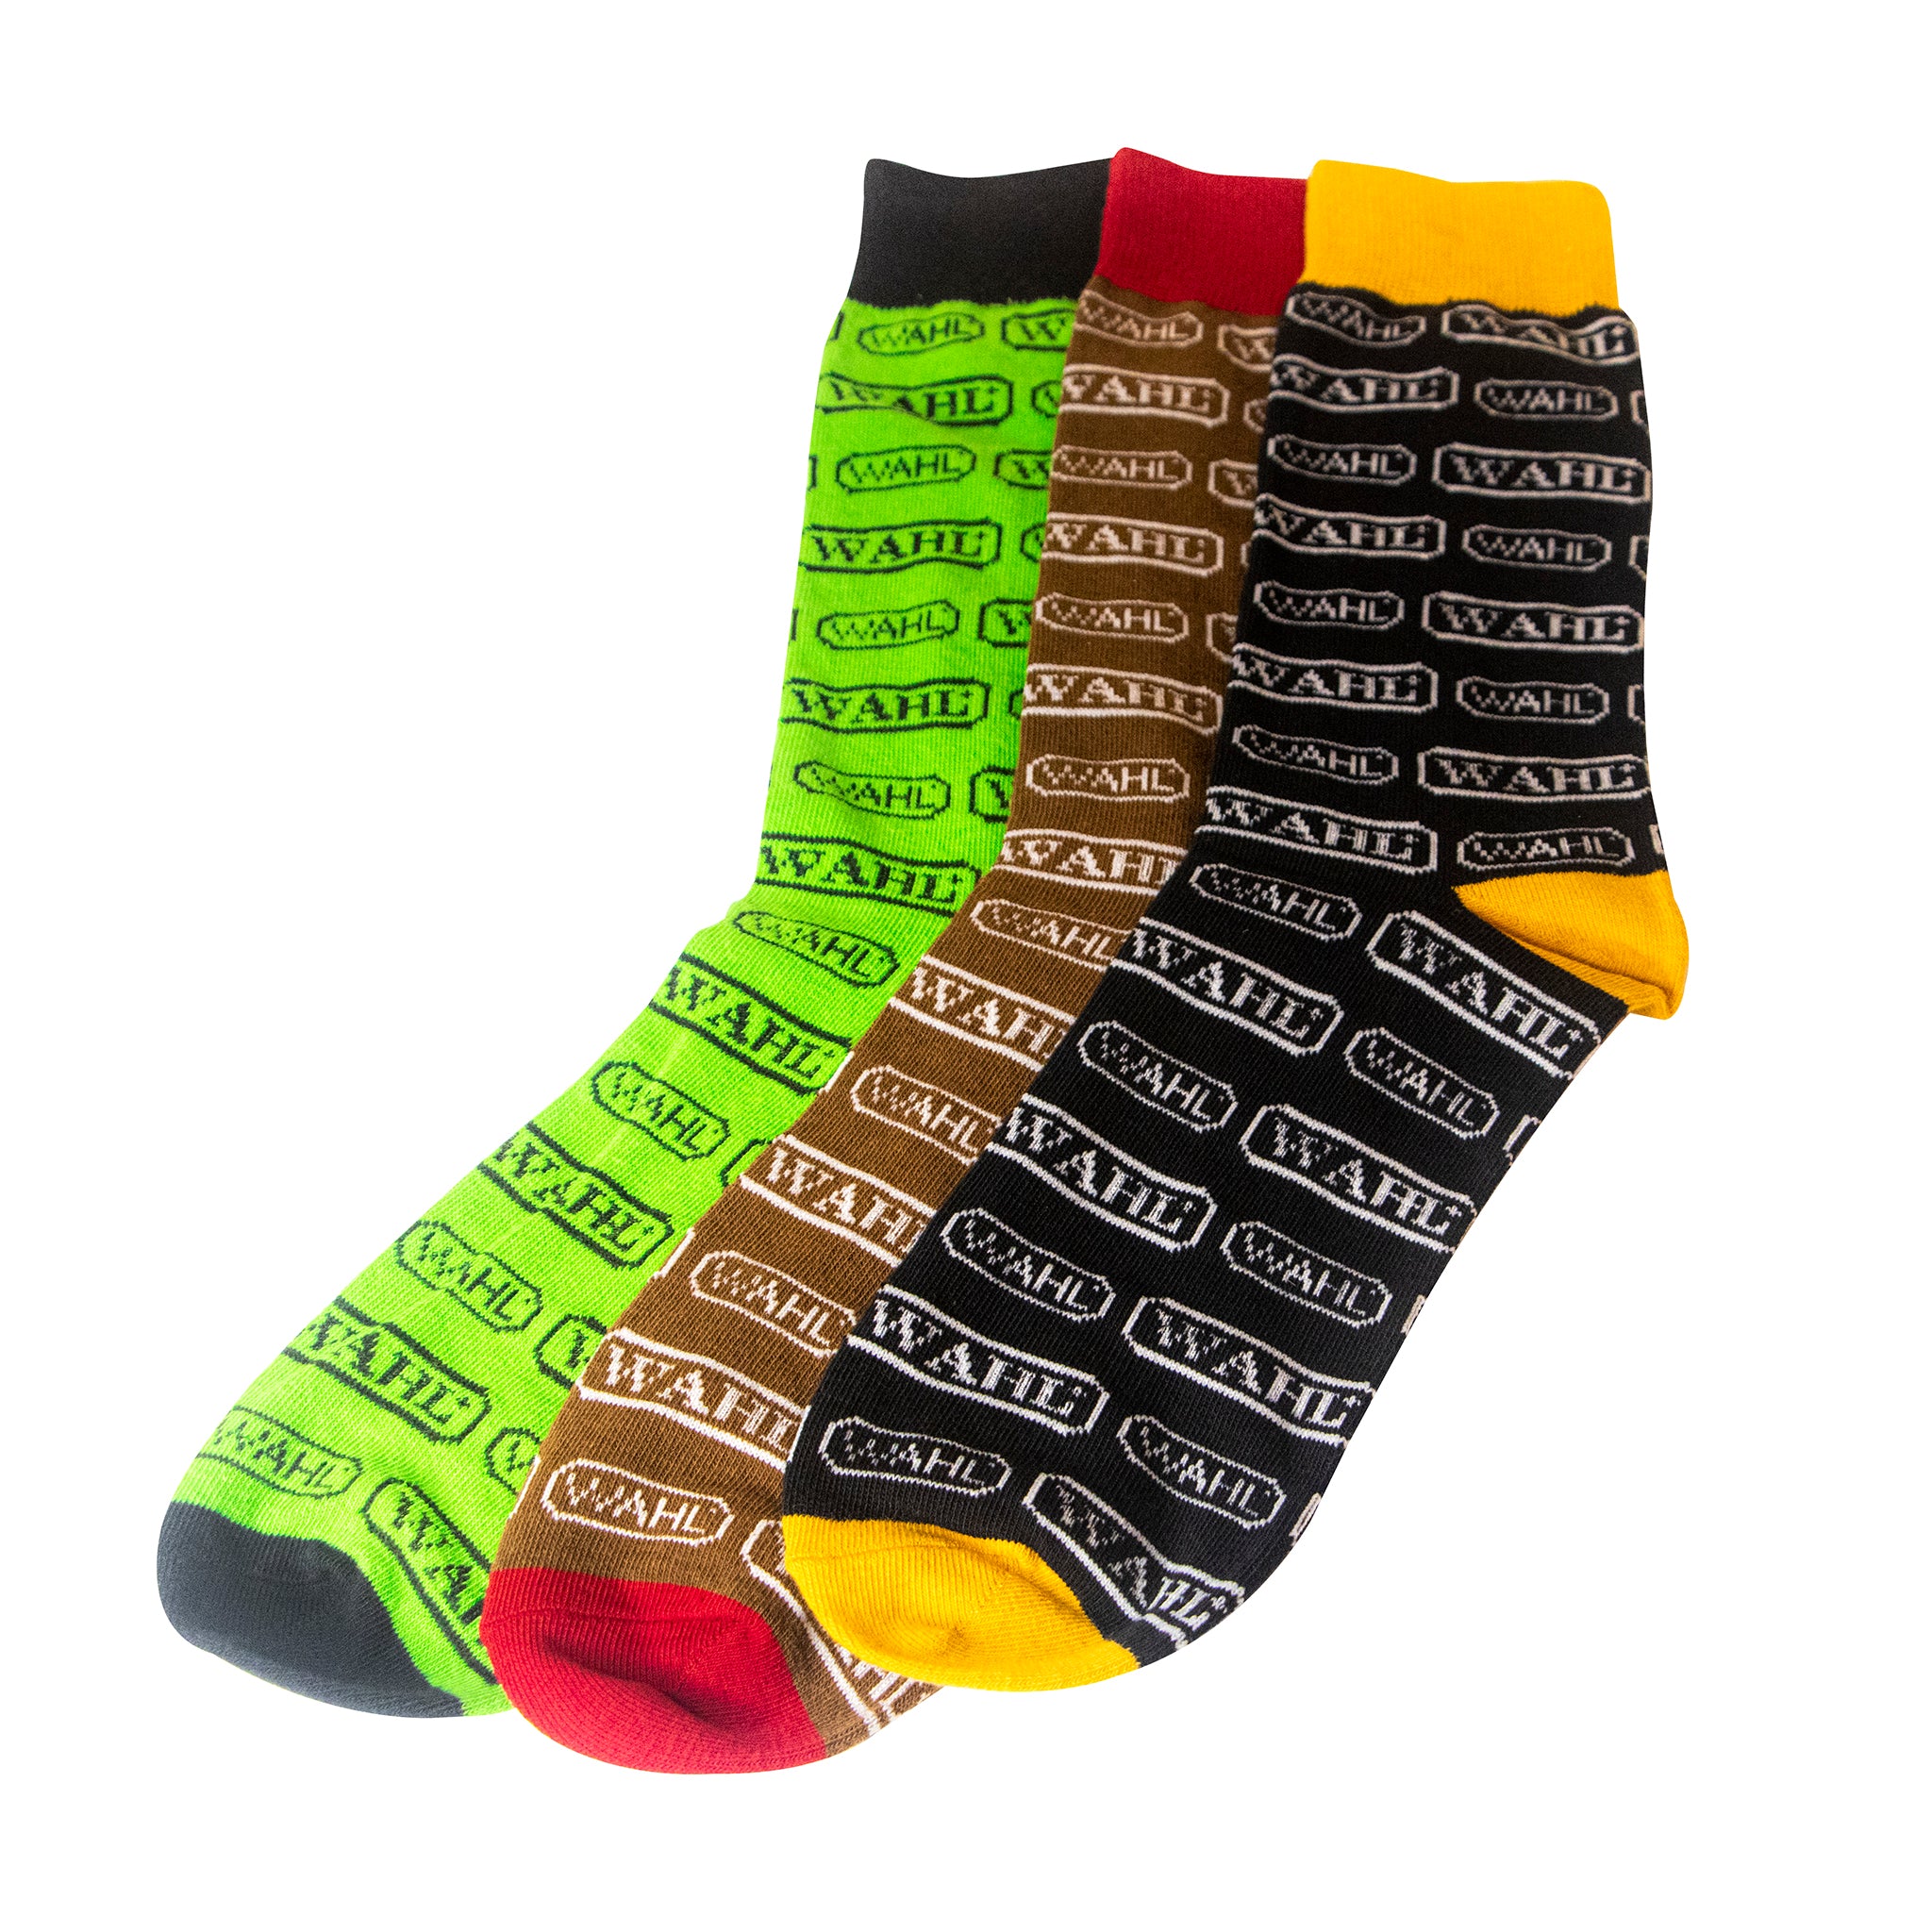 Wahl Limited Edition Socks